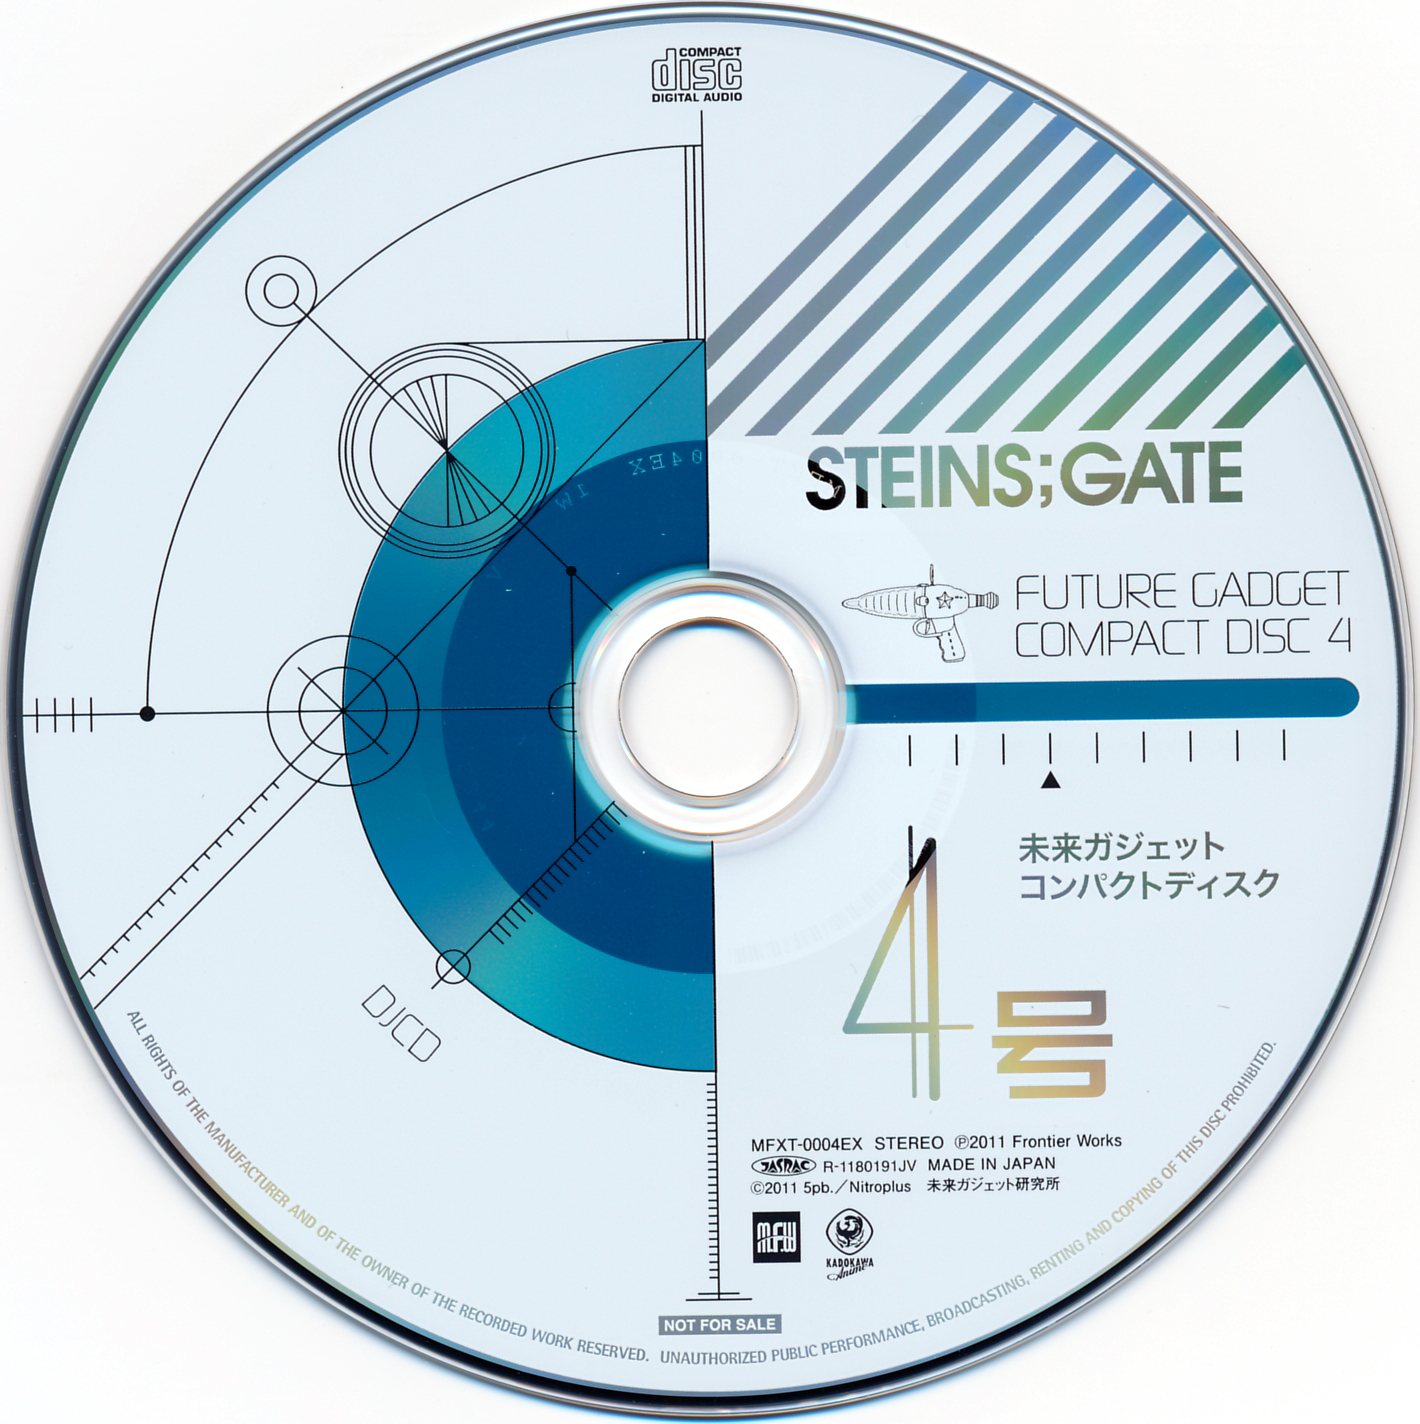 光碟-STEINS;GATE FUTURE GADGET COMPACT DISC 4.jpg